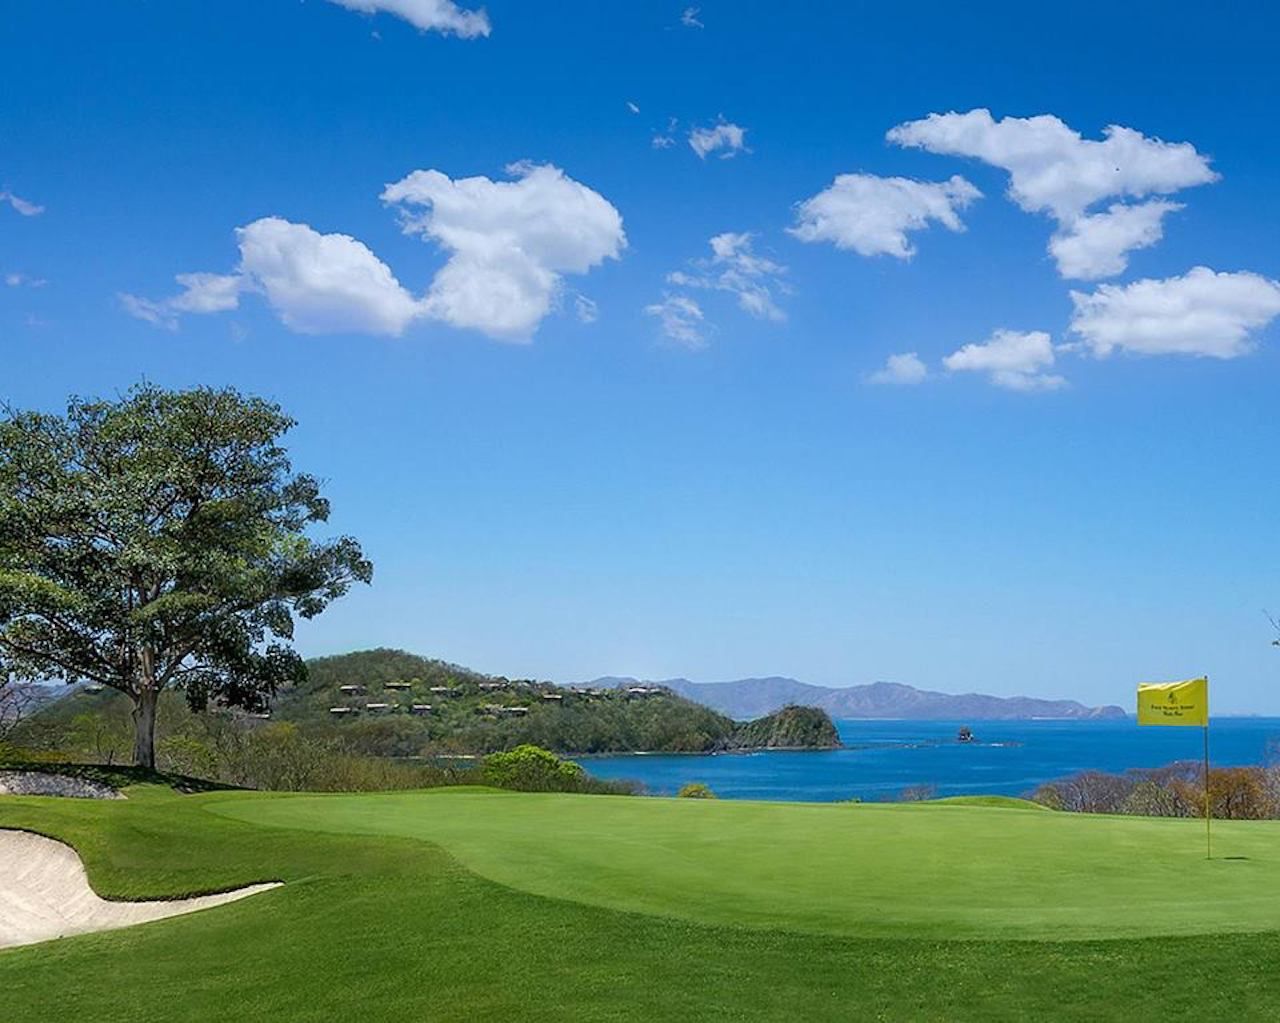 Four Seasons Resort Costa Rica at Peninsula Papagayo golf course